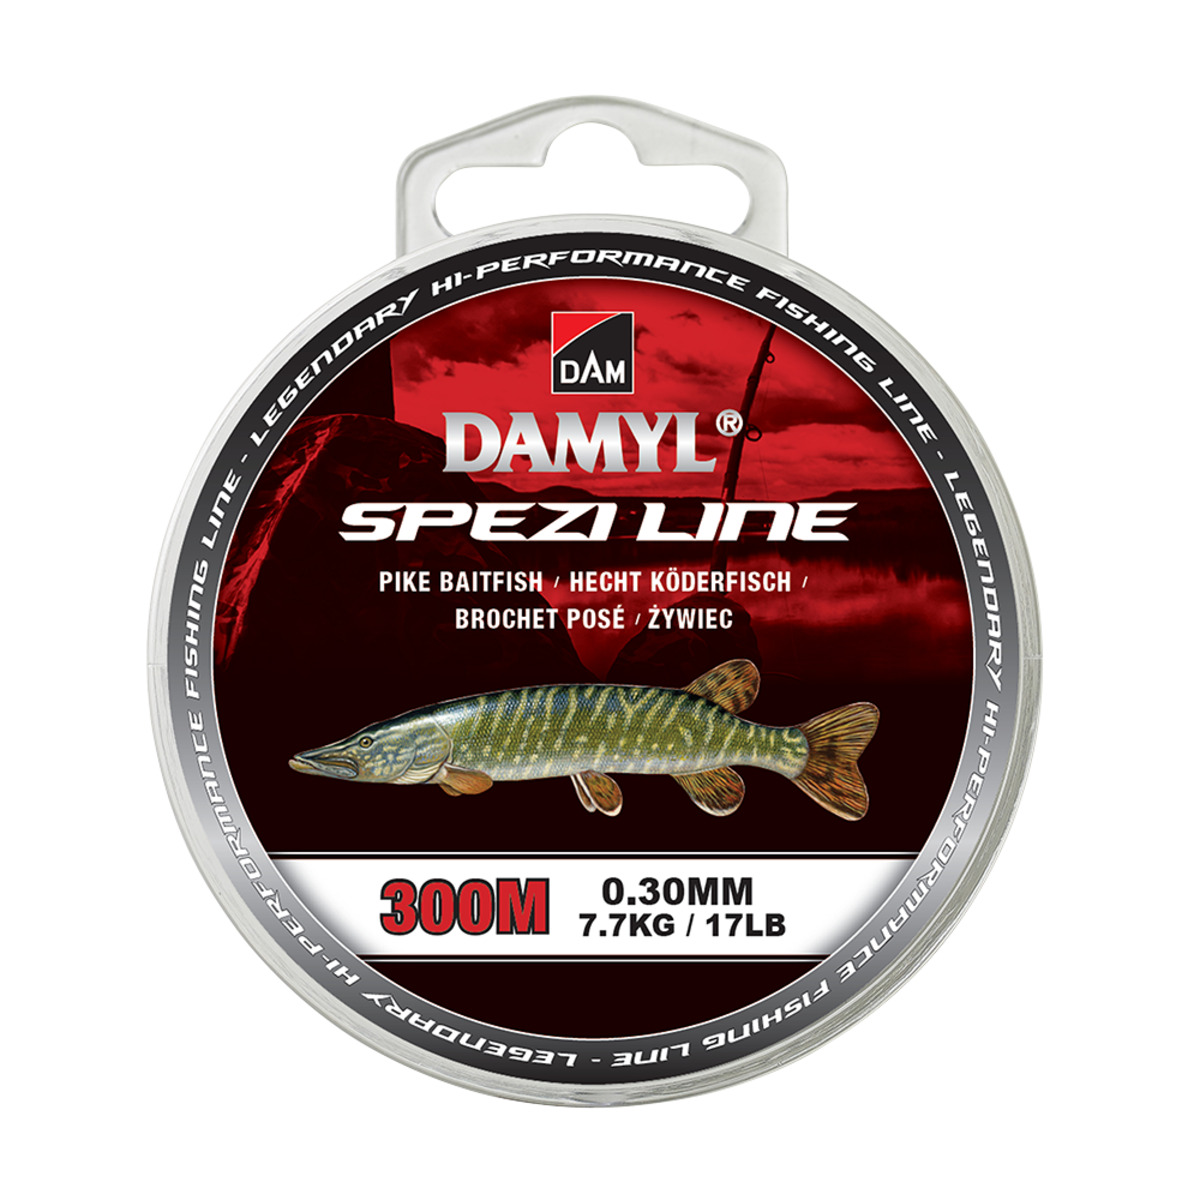 Damyl Spezi Line Pike Baitfish - 300M 0.30MM 7.7KG 17LBS DARK